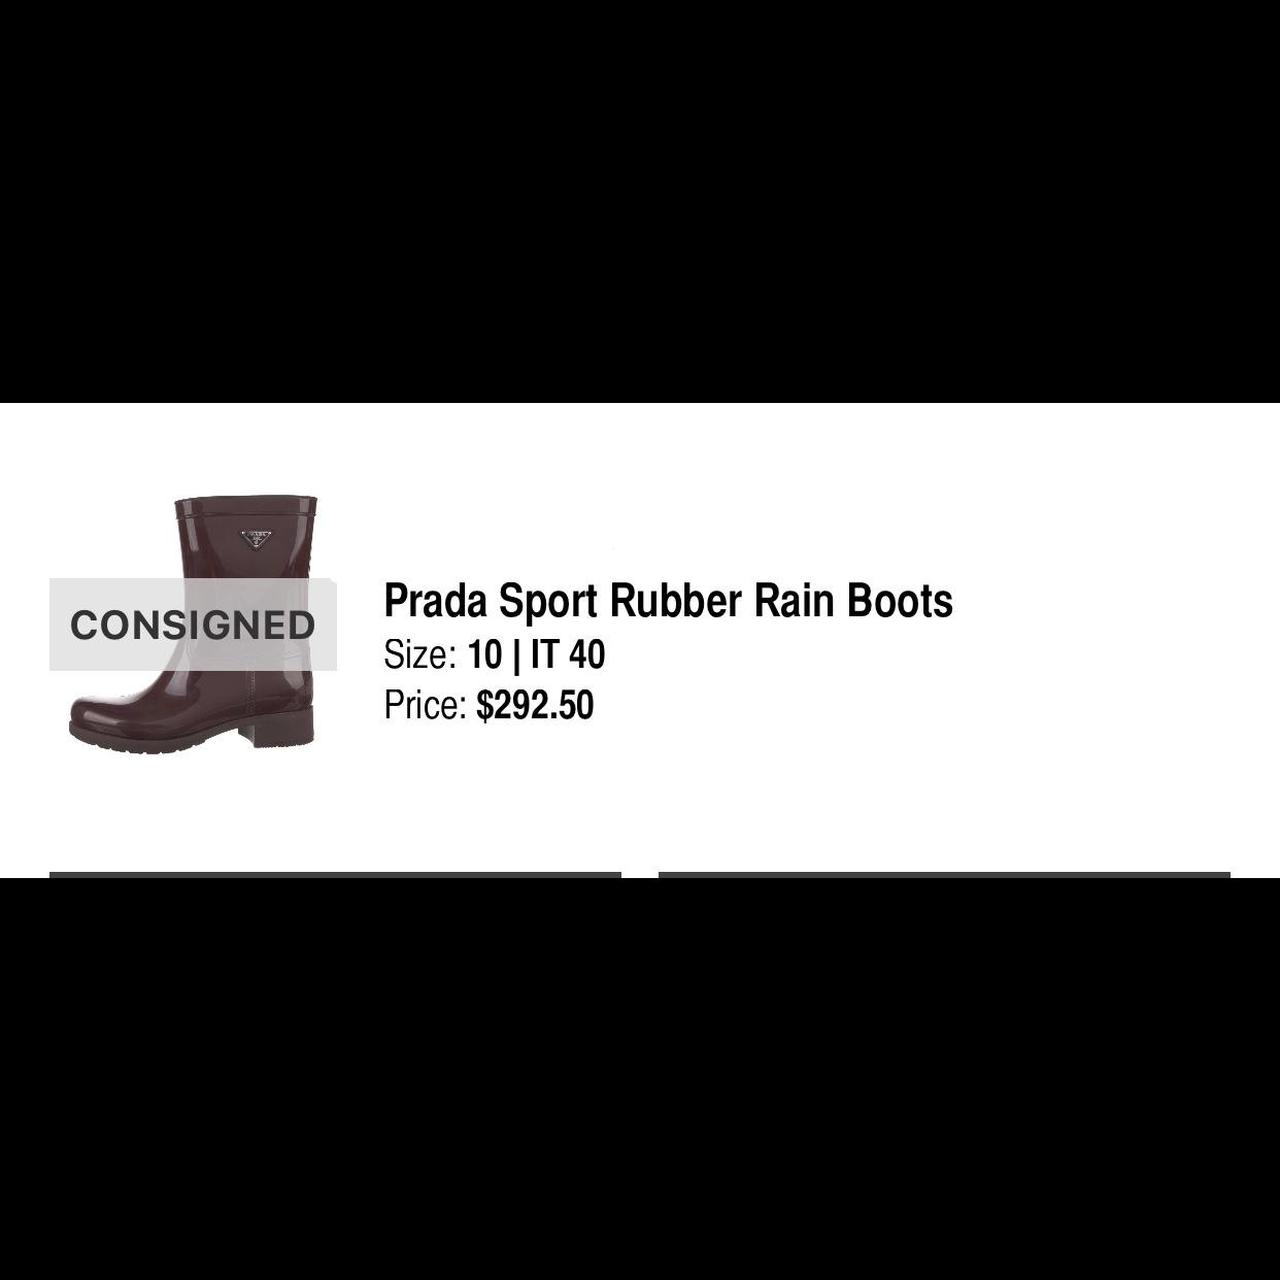 Beautiful Prada rain boots in the color burgundy, - Depop